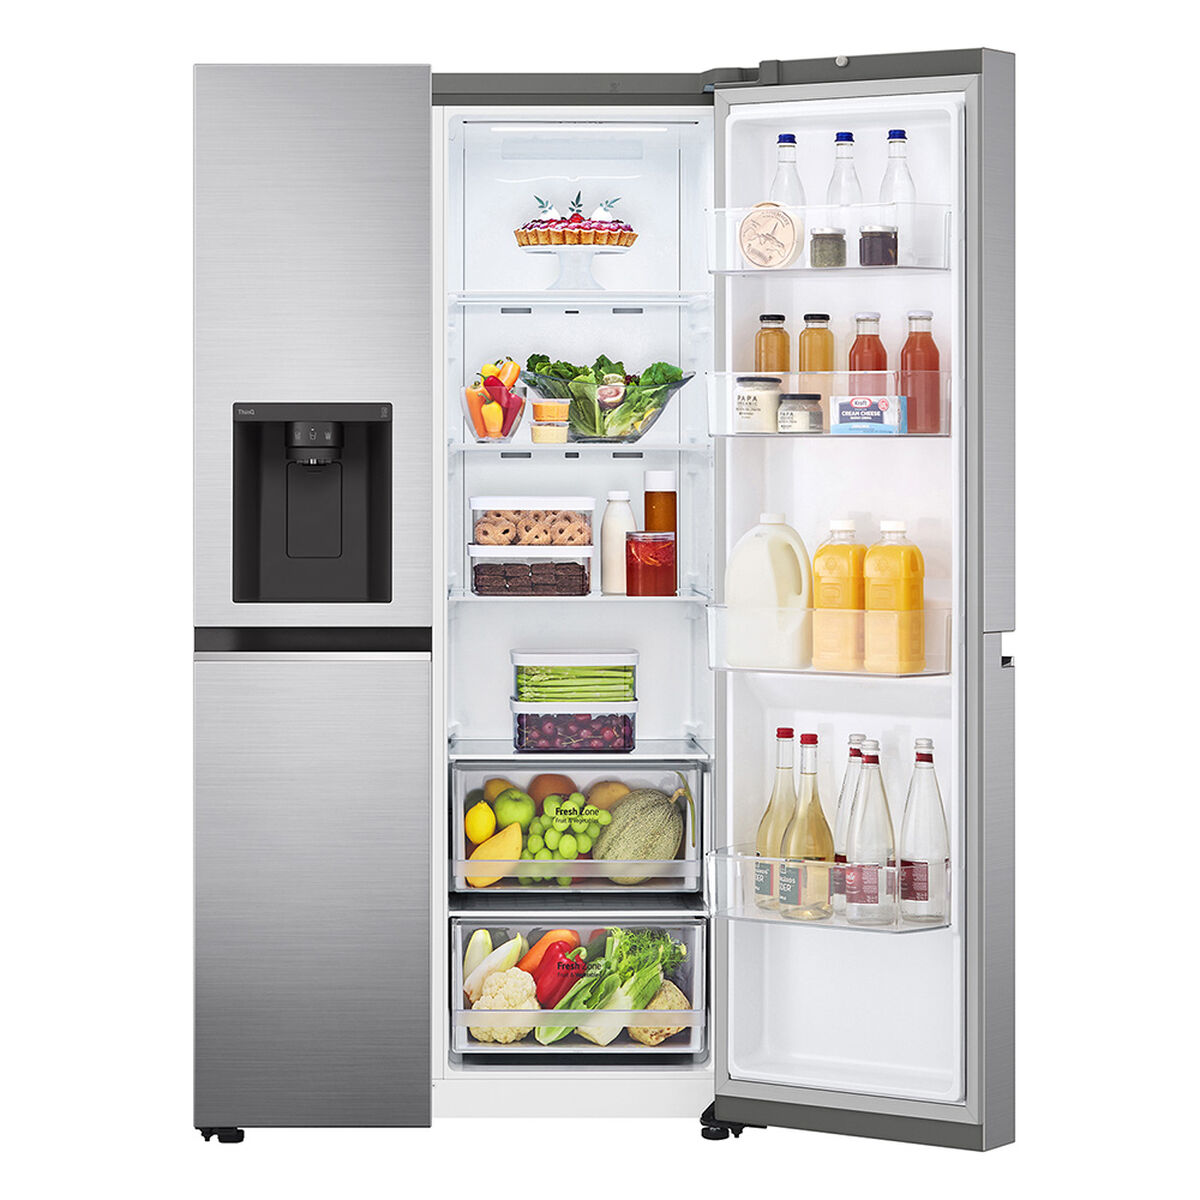 Refrigerador Side by Side LG GS66WPP 611 lts